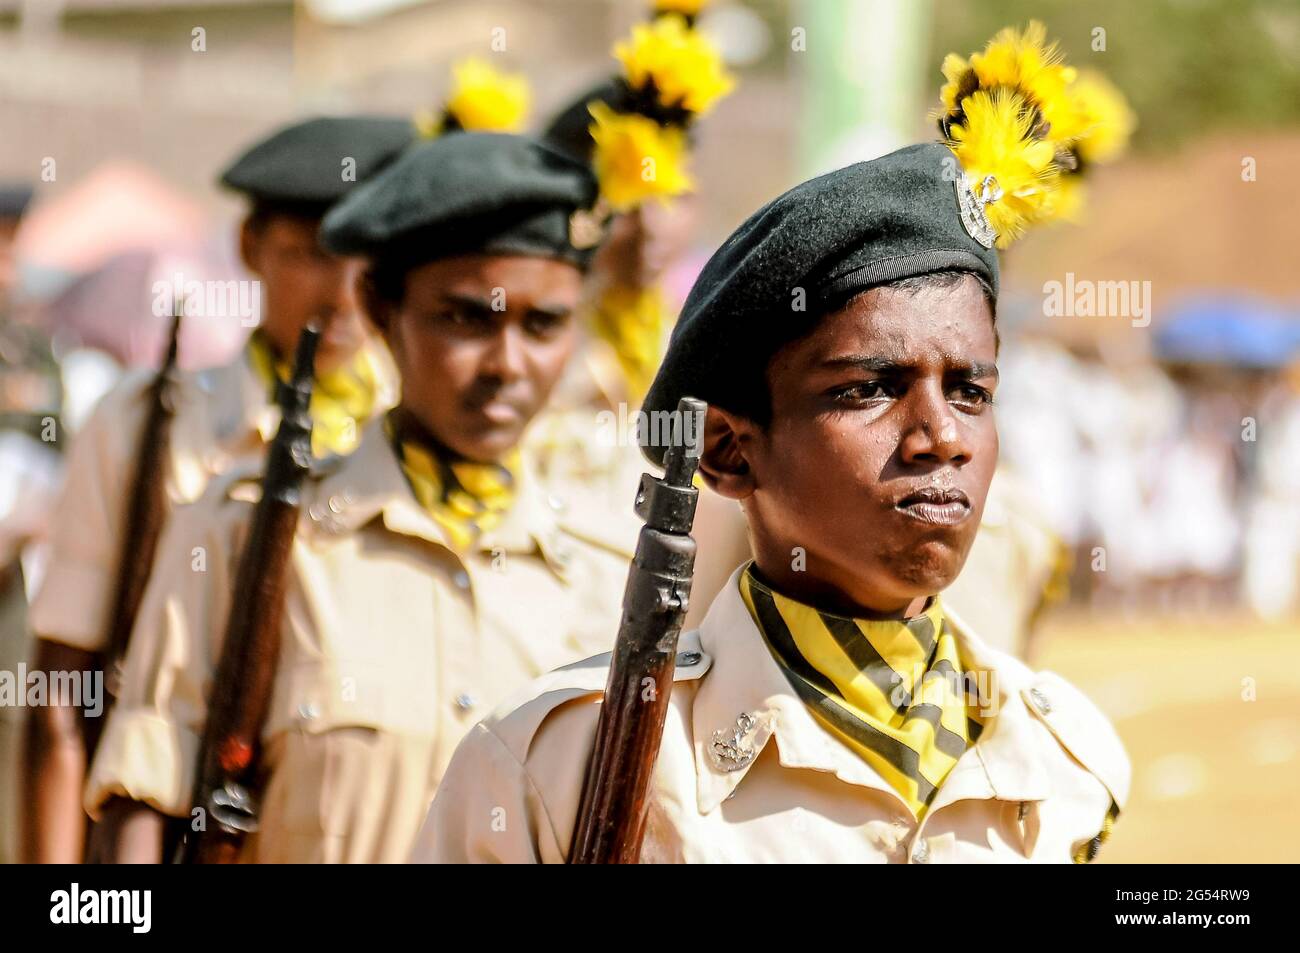 Kadettenschüler in Parade in einer Schule colombo, Sri lanka 29. januar 2019 Stockfoto